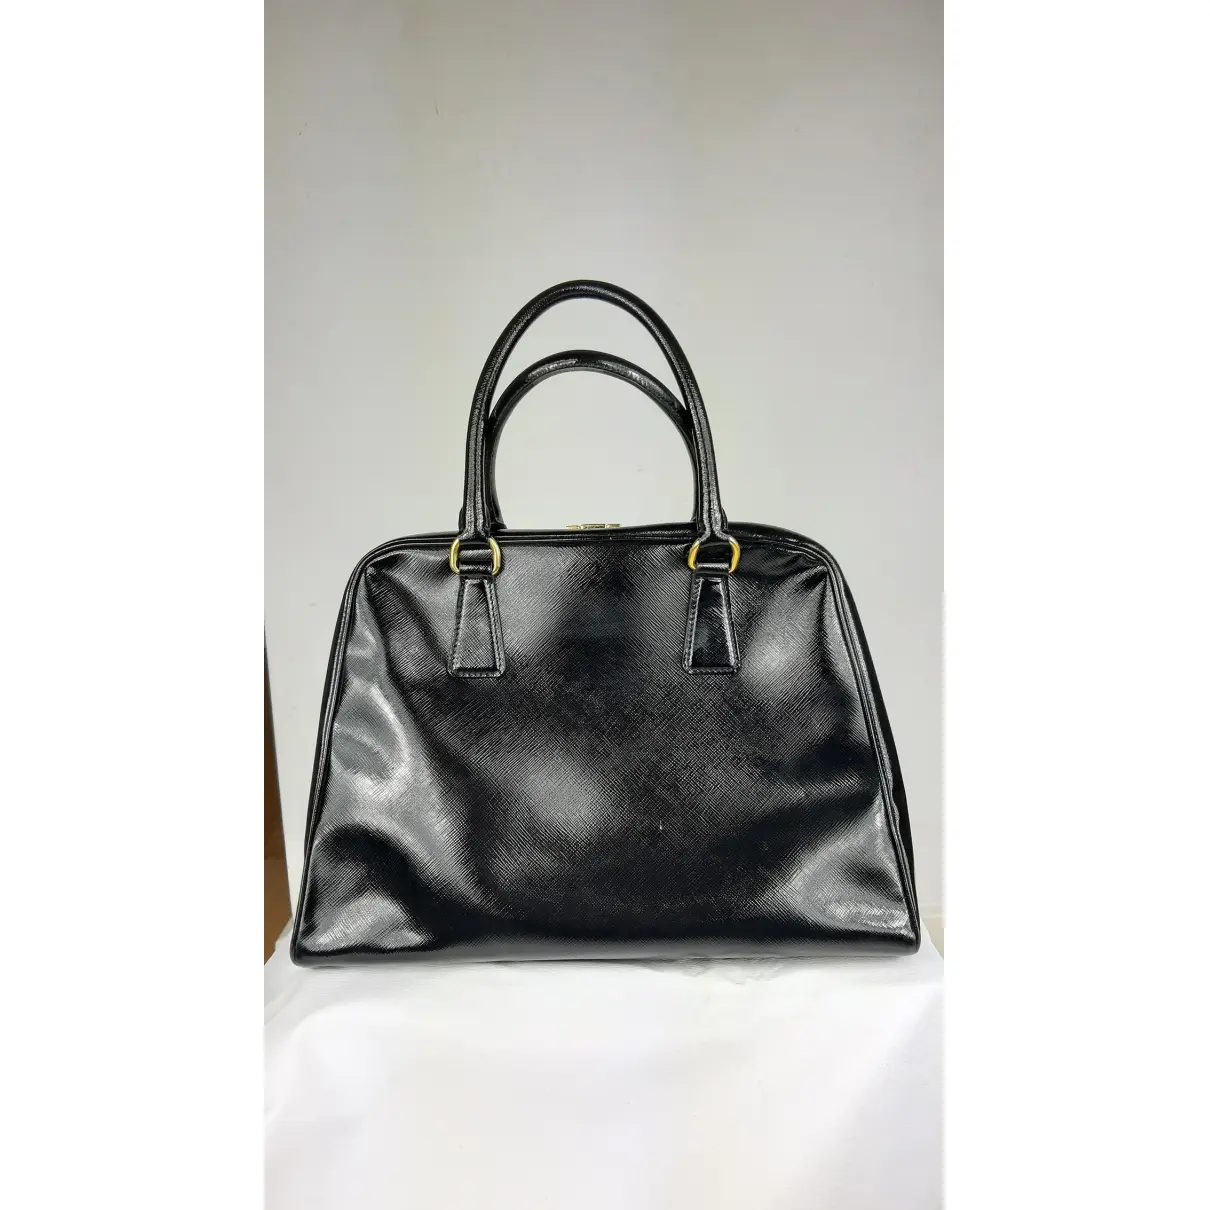 Buy Prada Pyramid leather handbag online